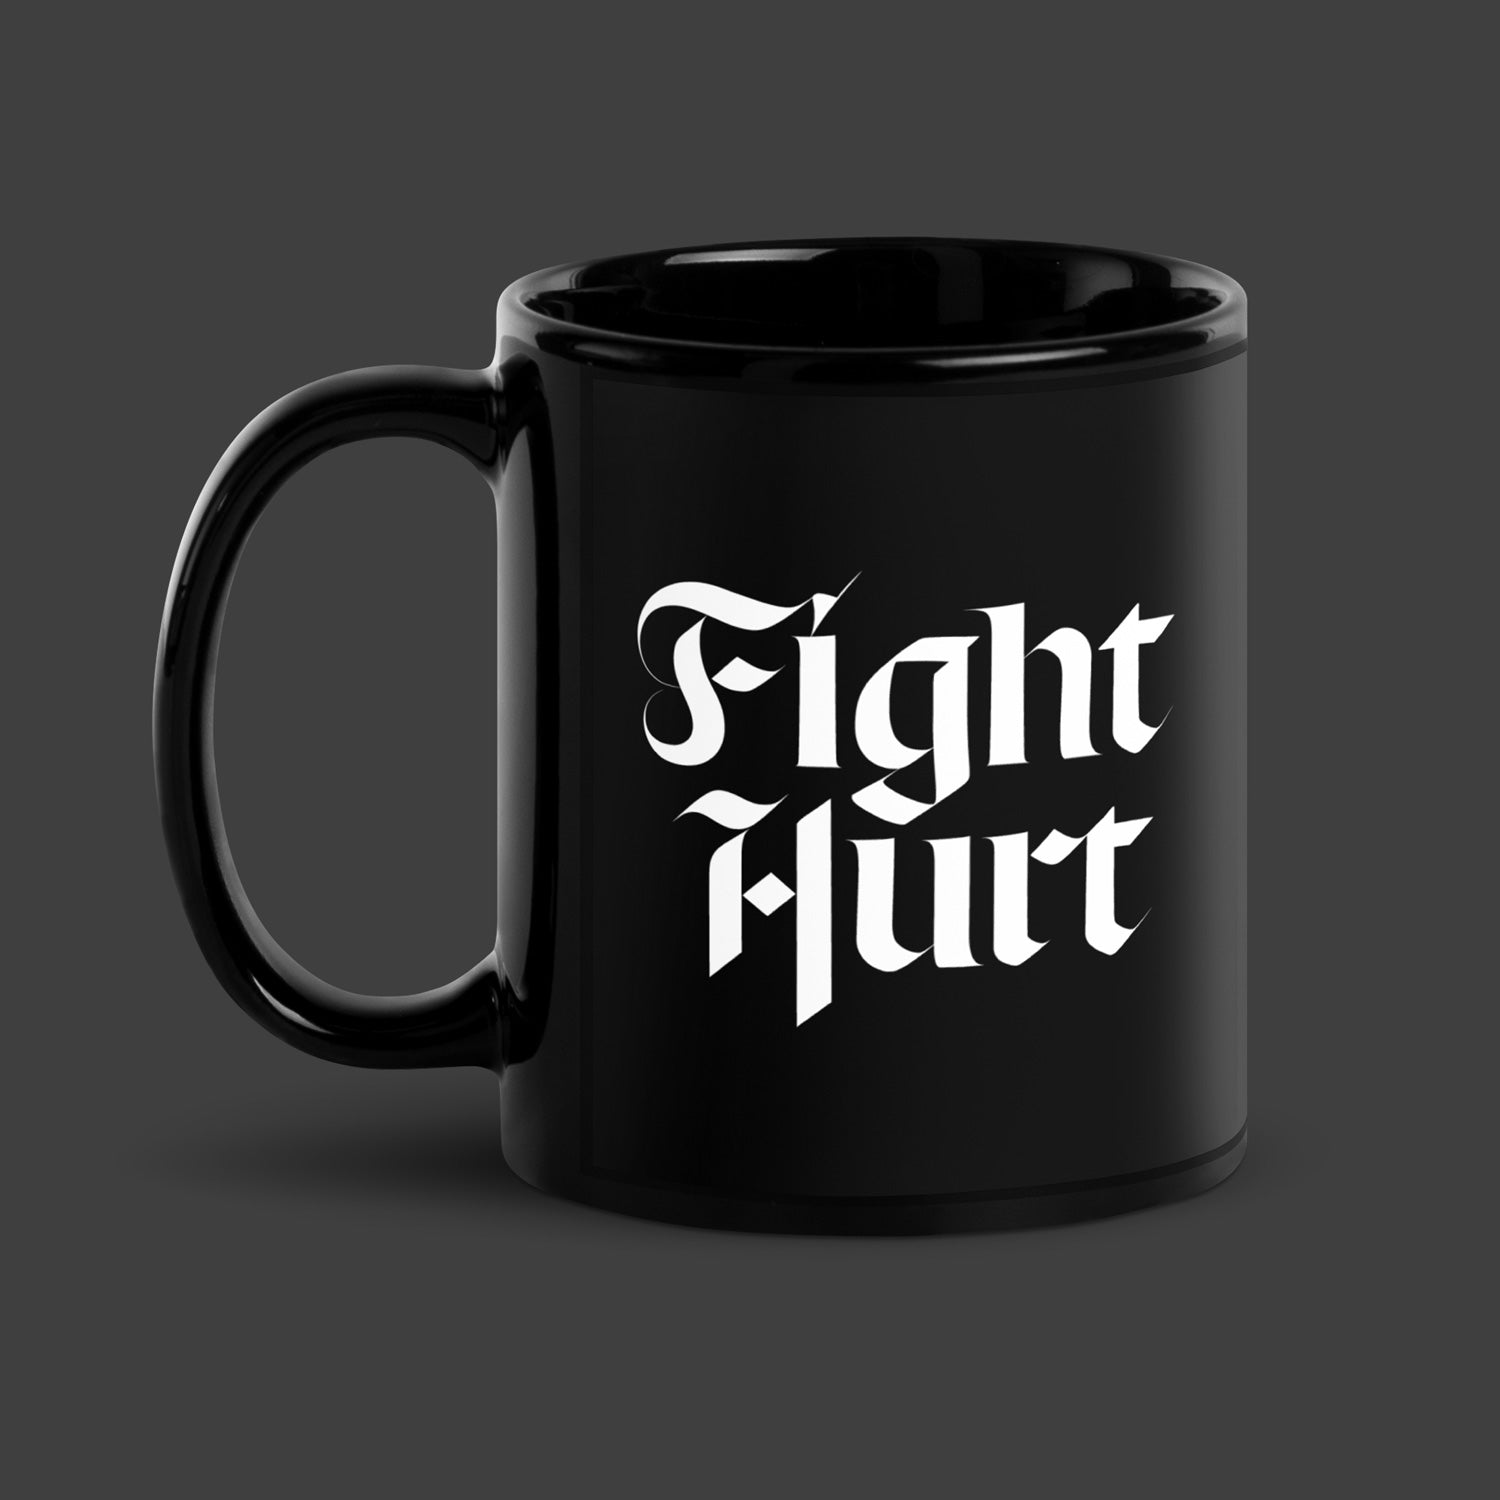 Fight Hurt Mug